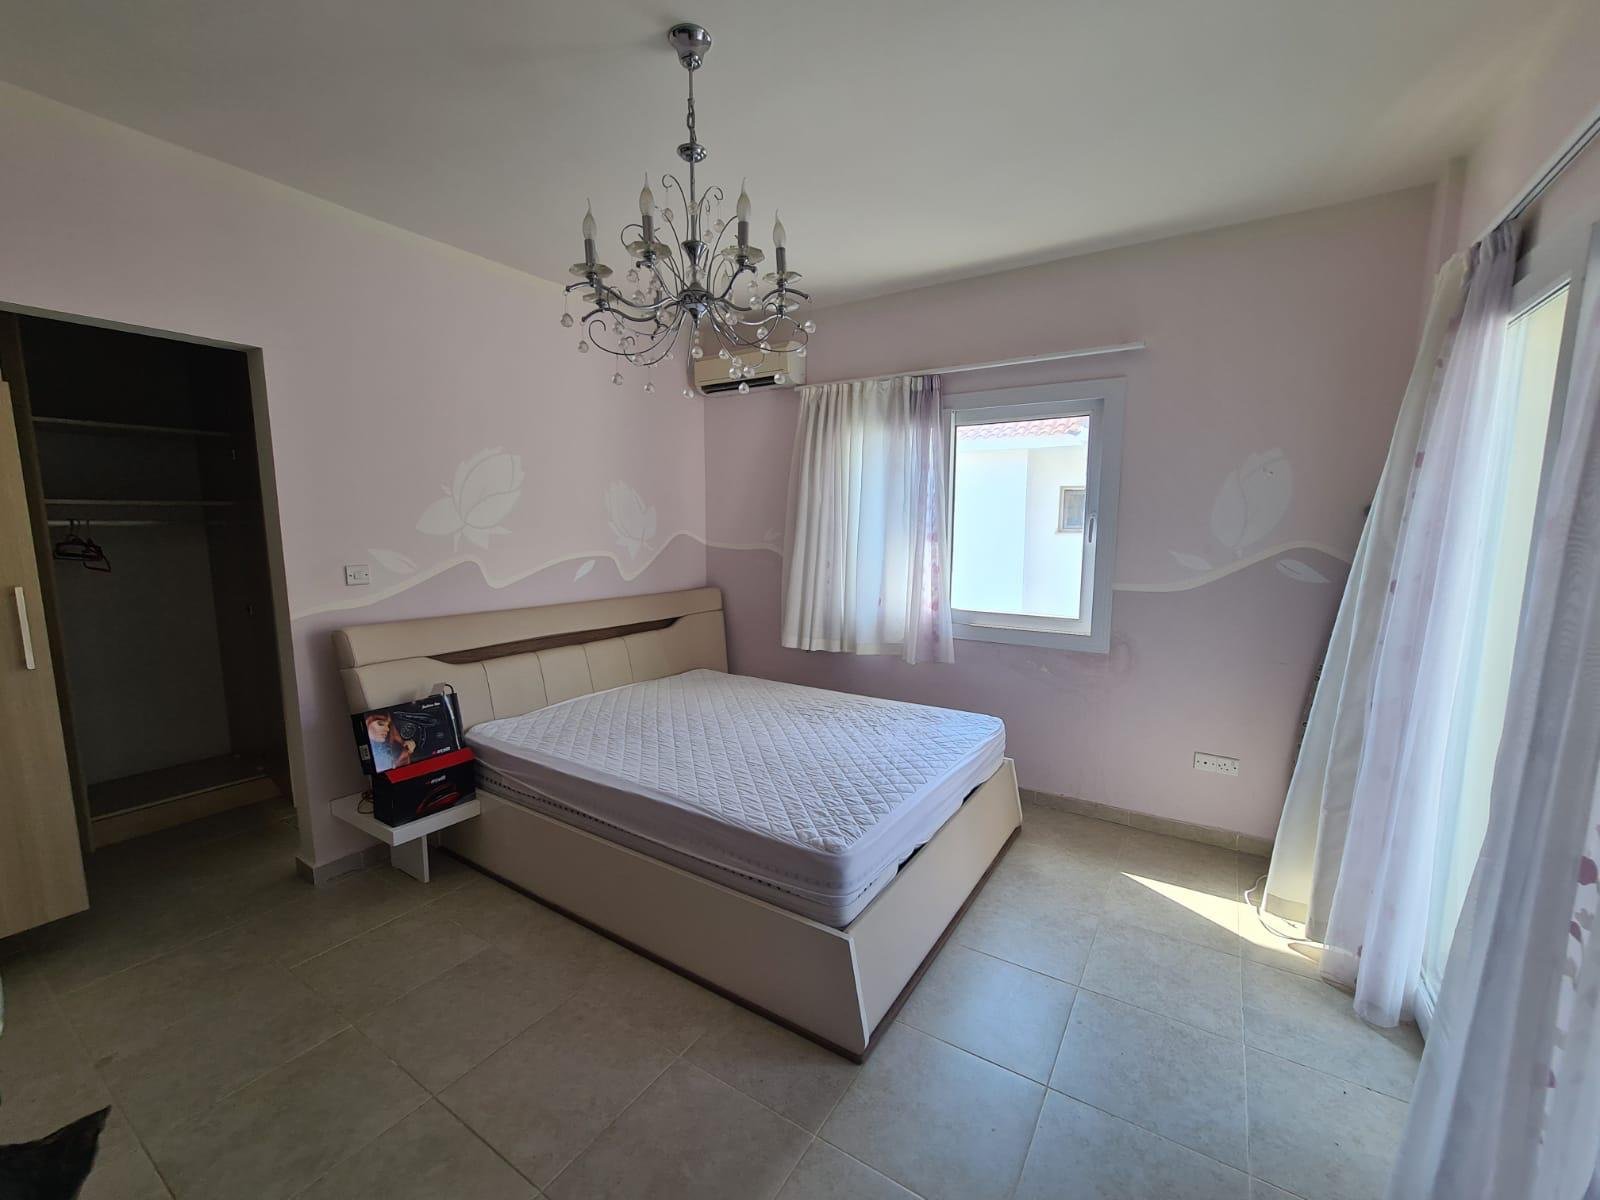 3 bedroom villa for sale in Kyrenia, Karshiyaka-d106bcda-fcf1-434d-b4c2-851013a59e20